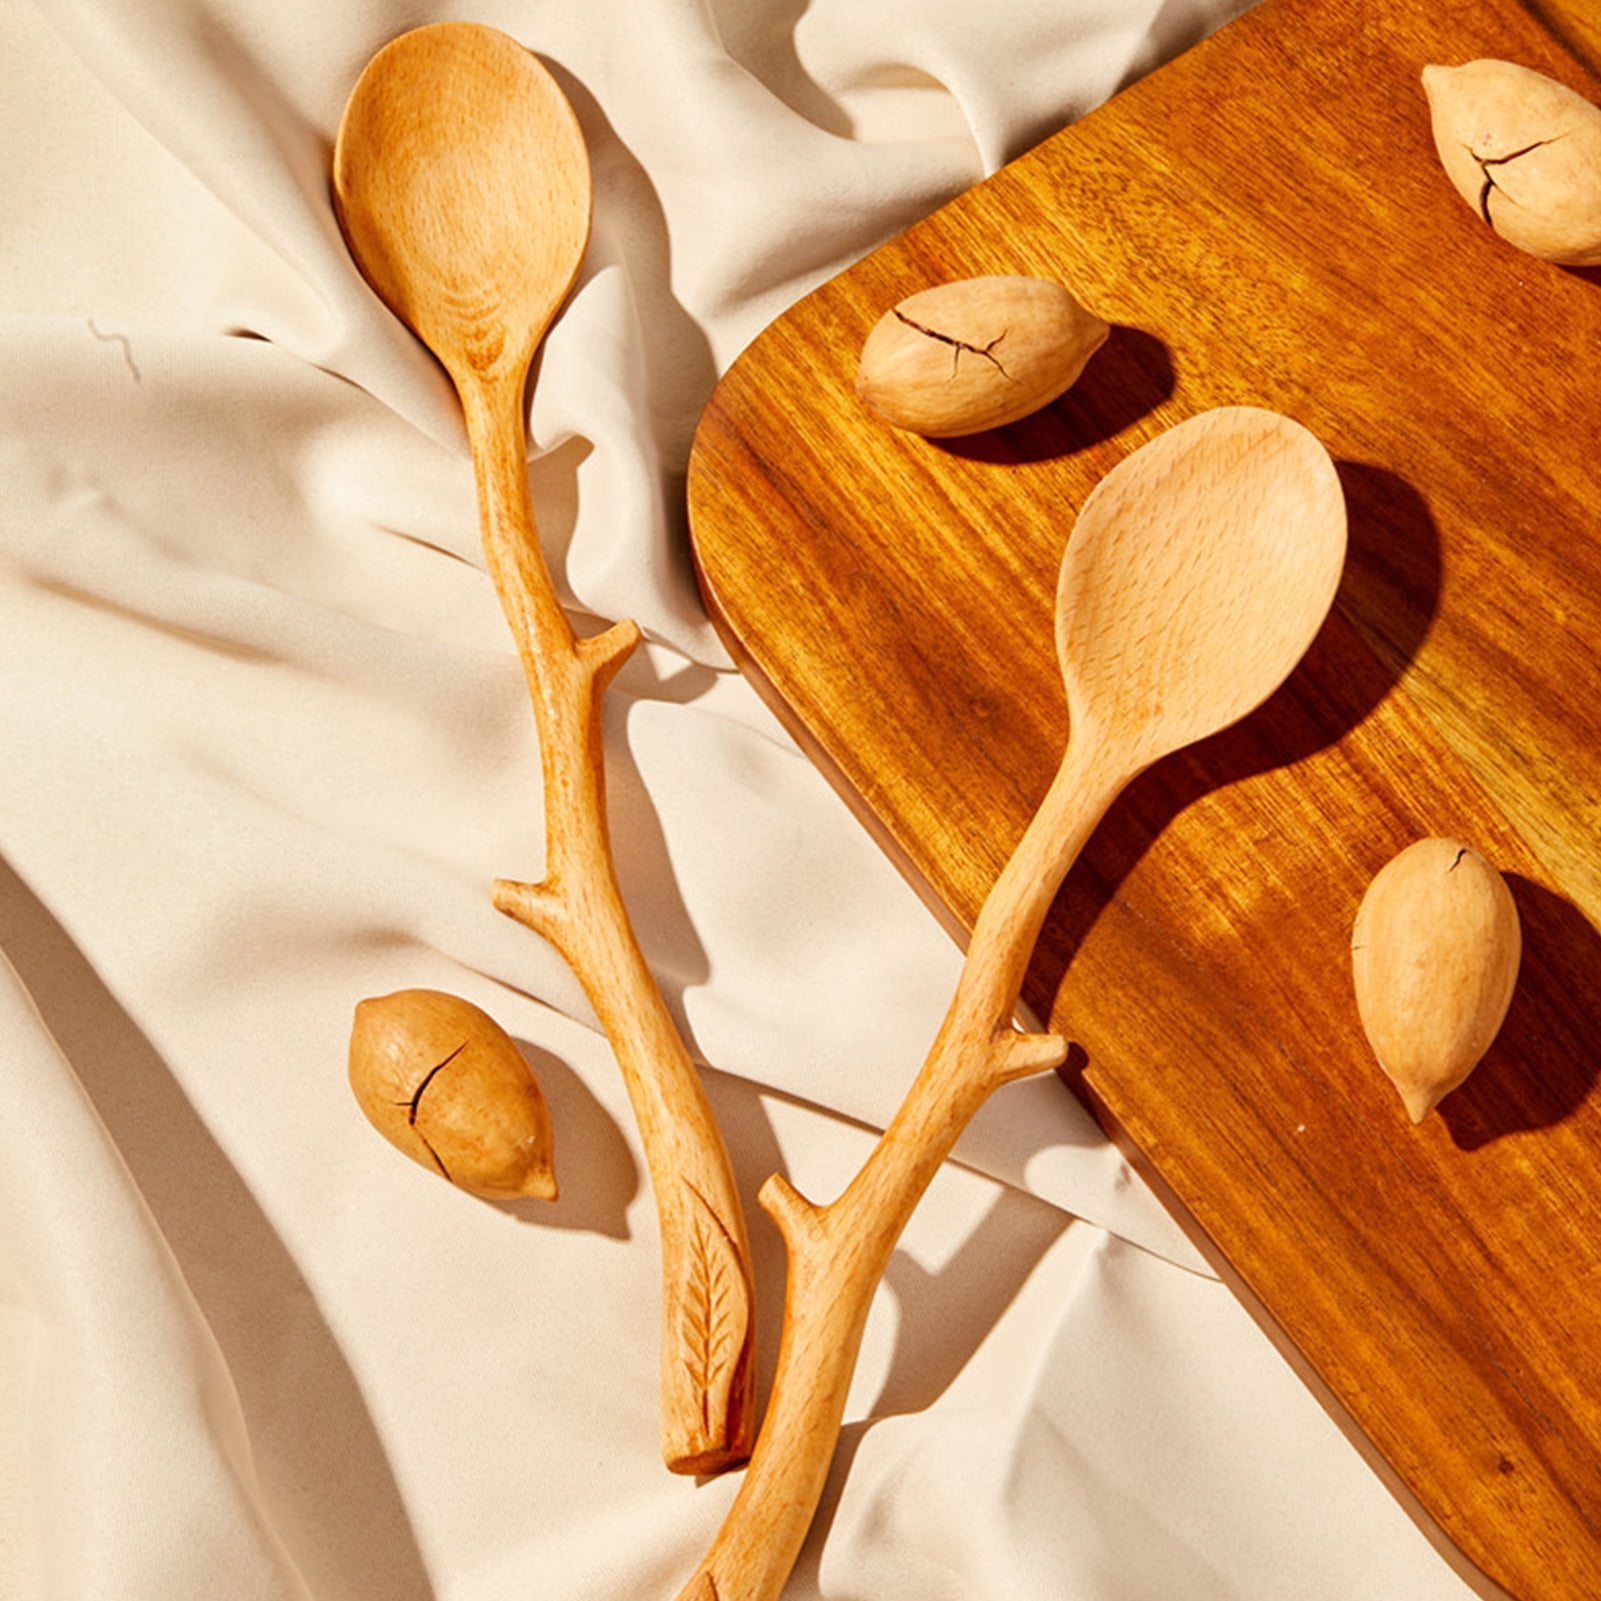 1x Wooden Soup Spoon Cooking Kitchen Utensil Wood Soup Coffee Milk Mixing Scoop 